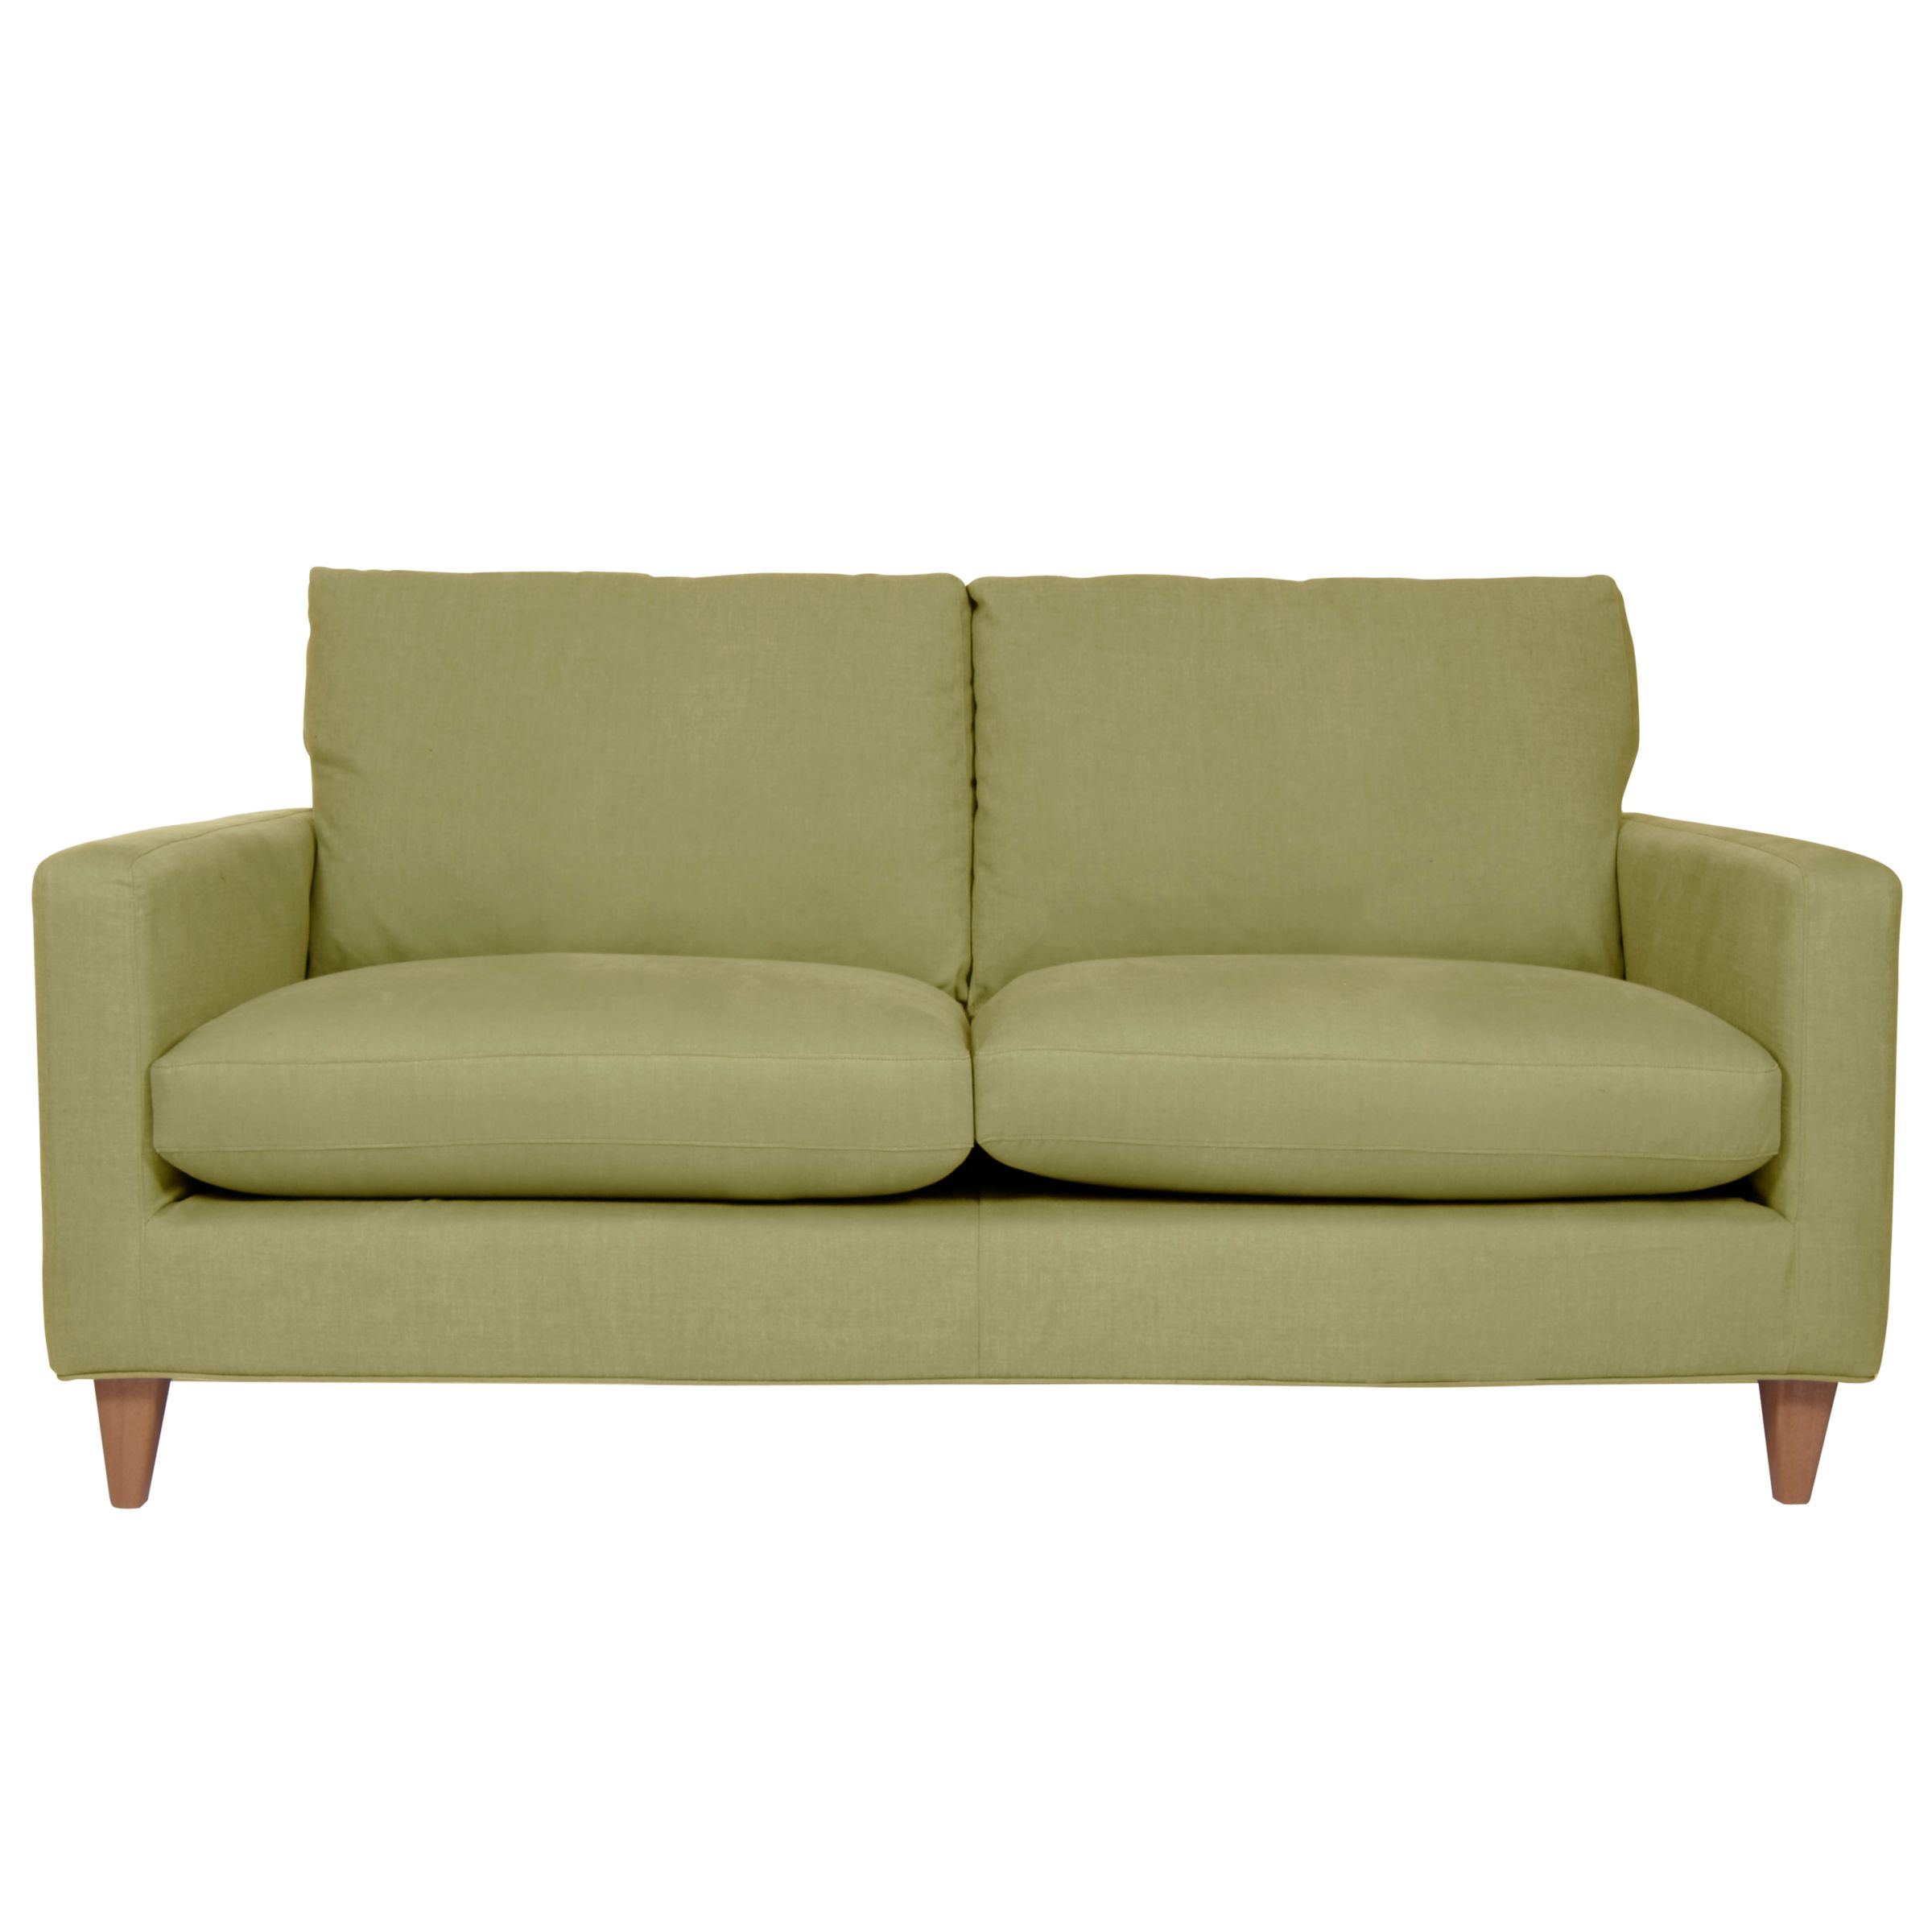 John Lewis Bailey Medium Sofa, Olive, width 175cm